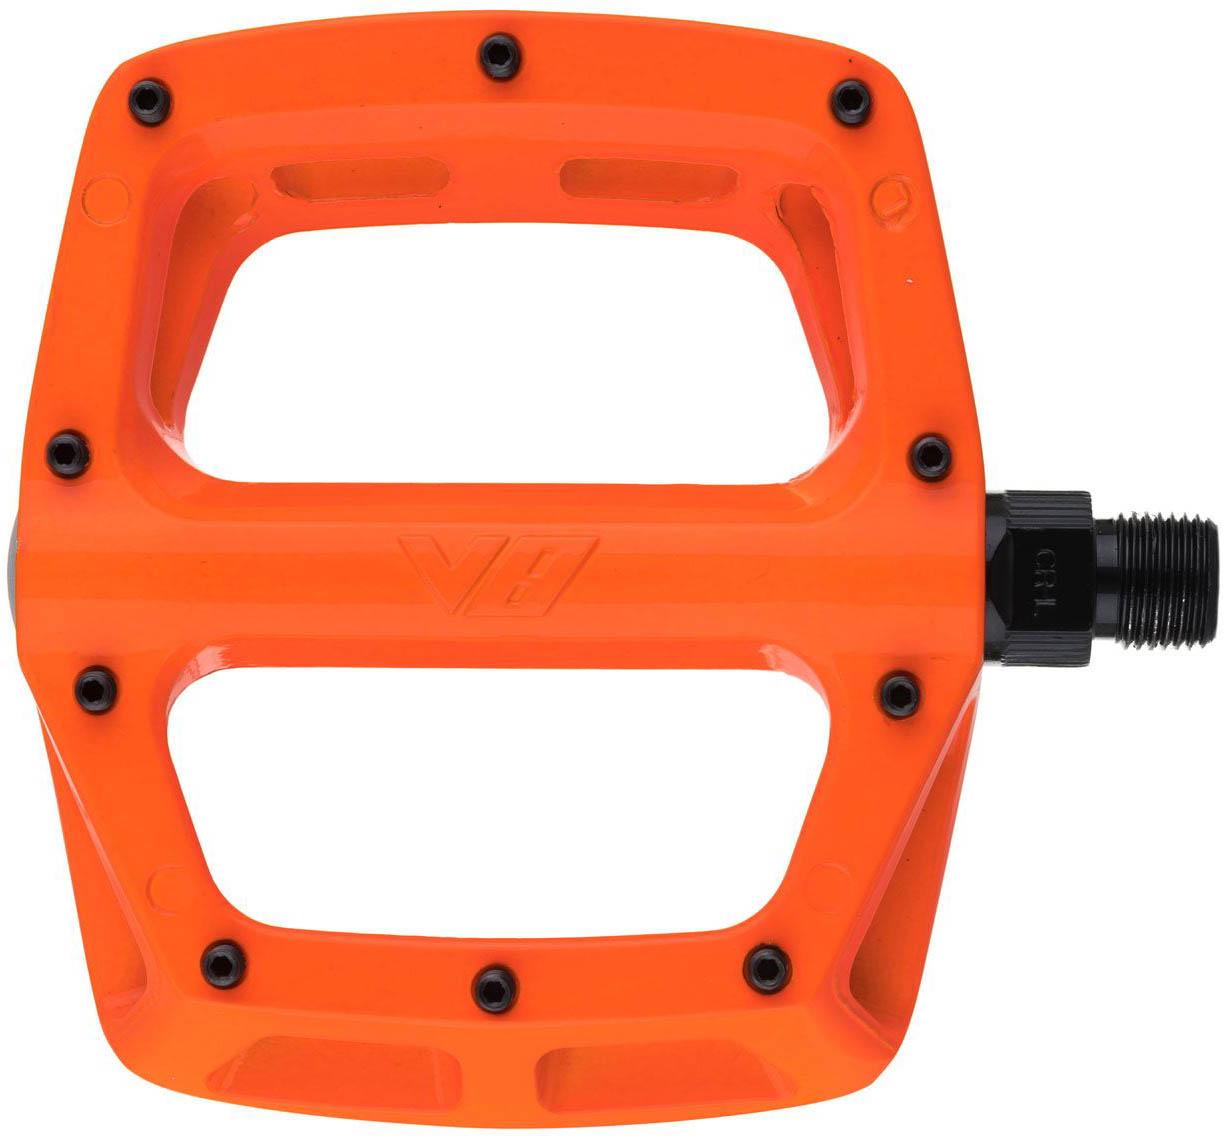 Dmr V8 Pedal - Highlighter Orange